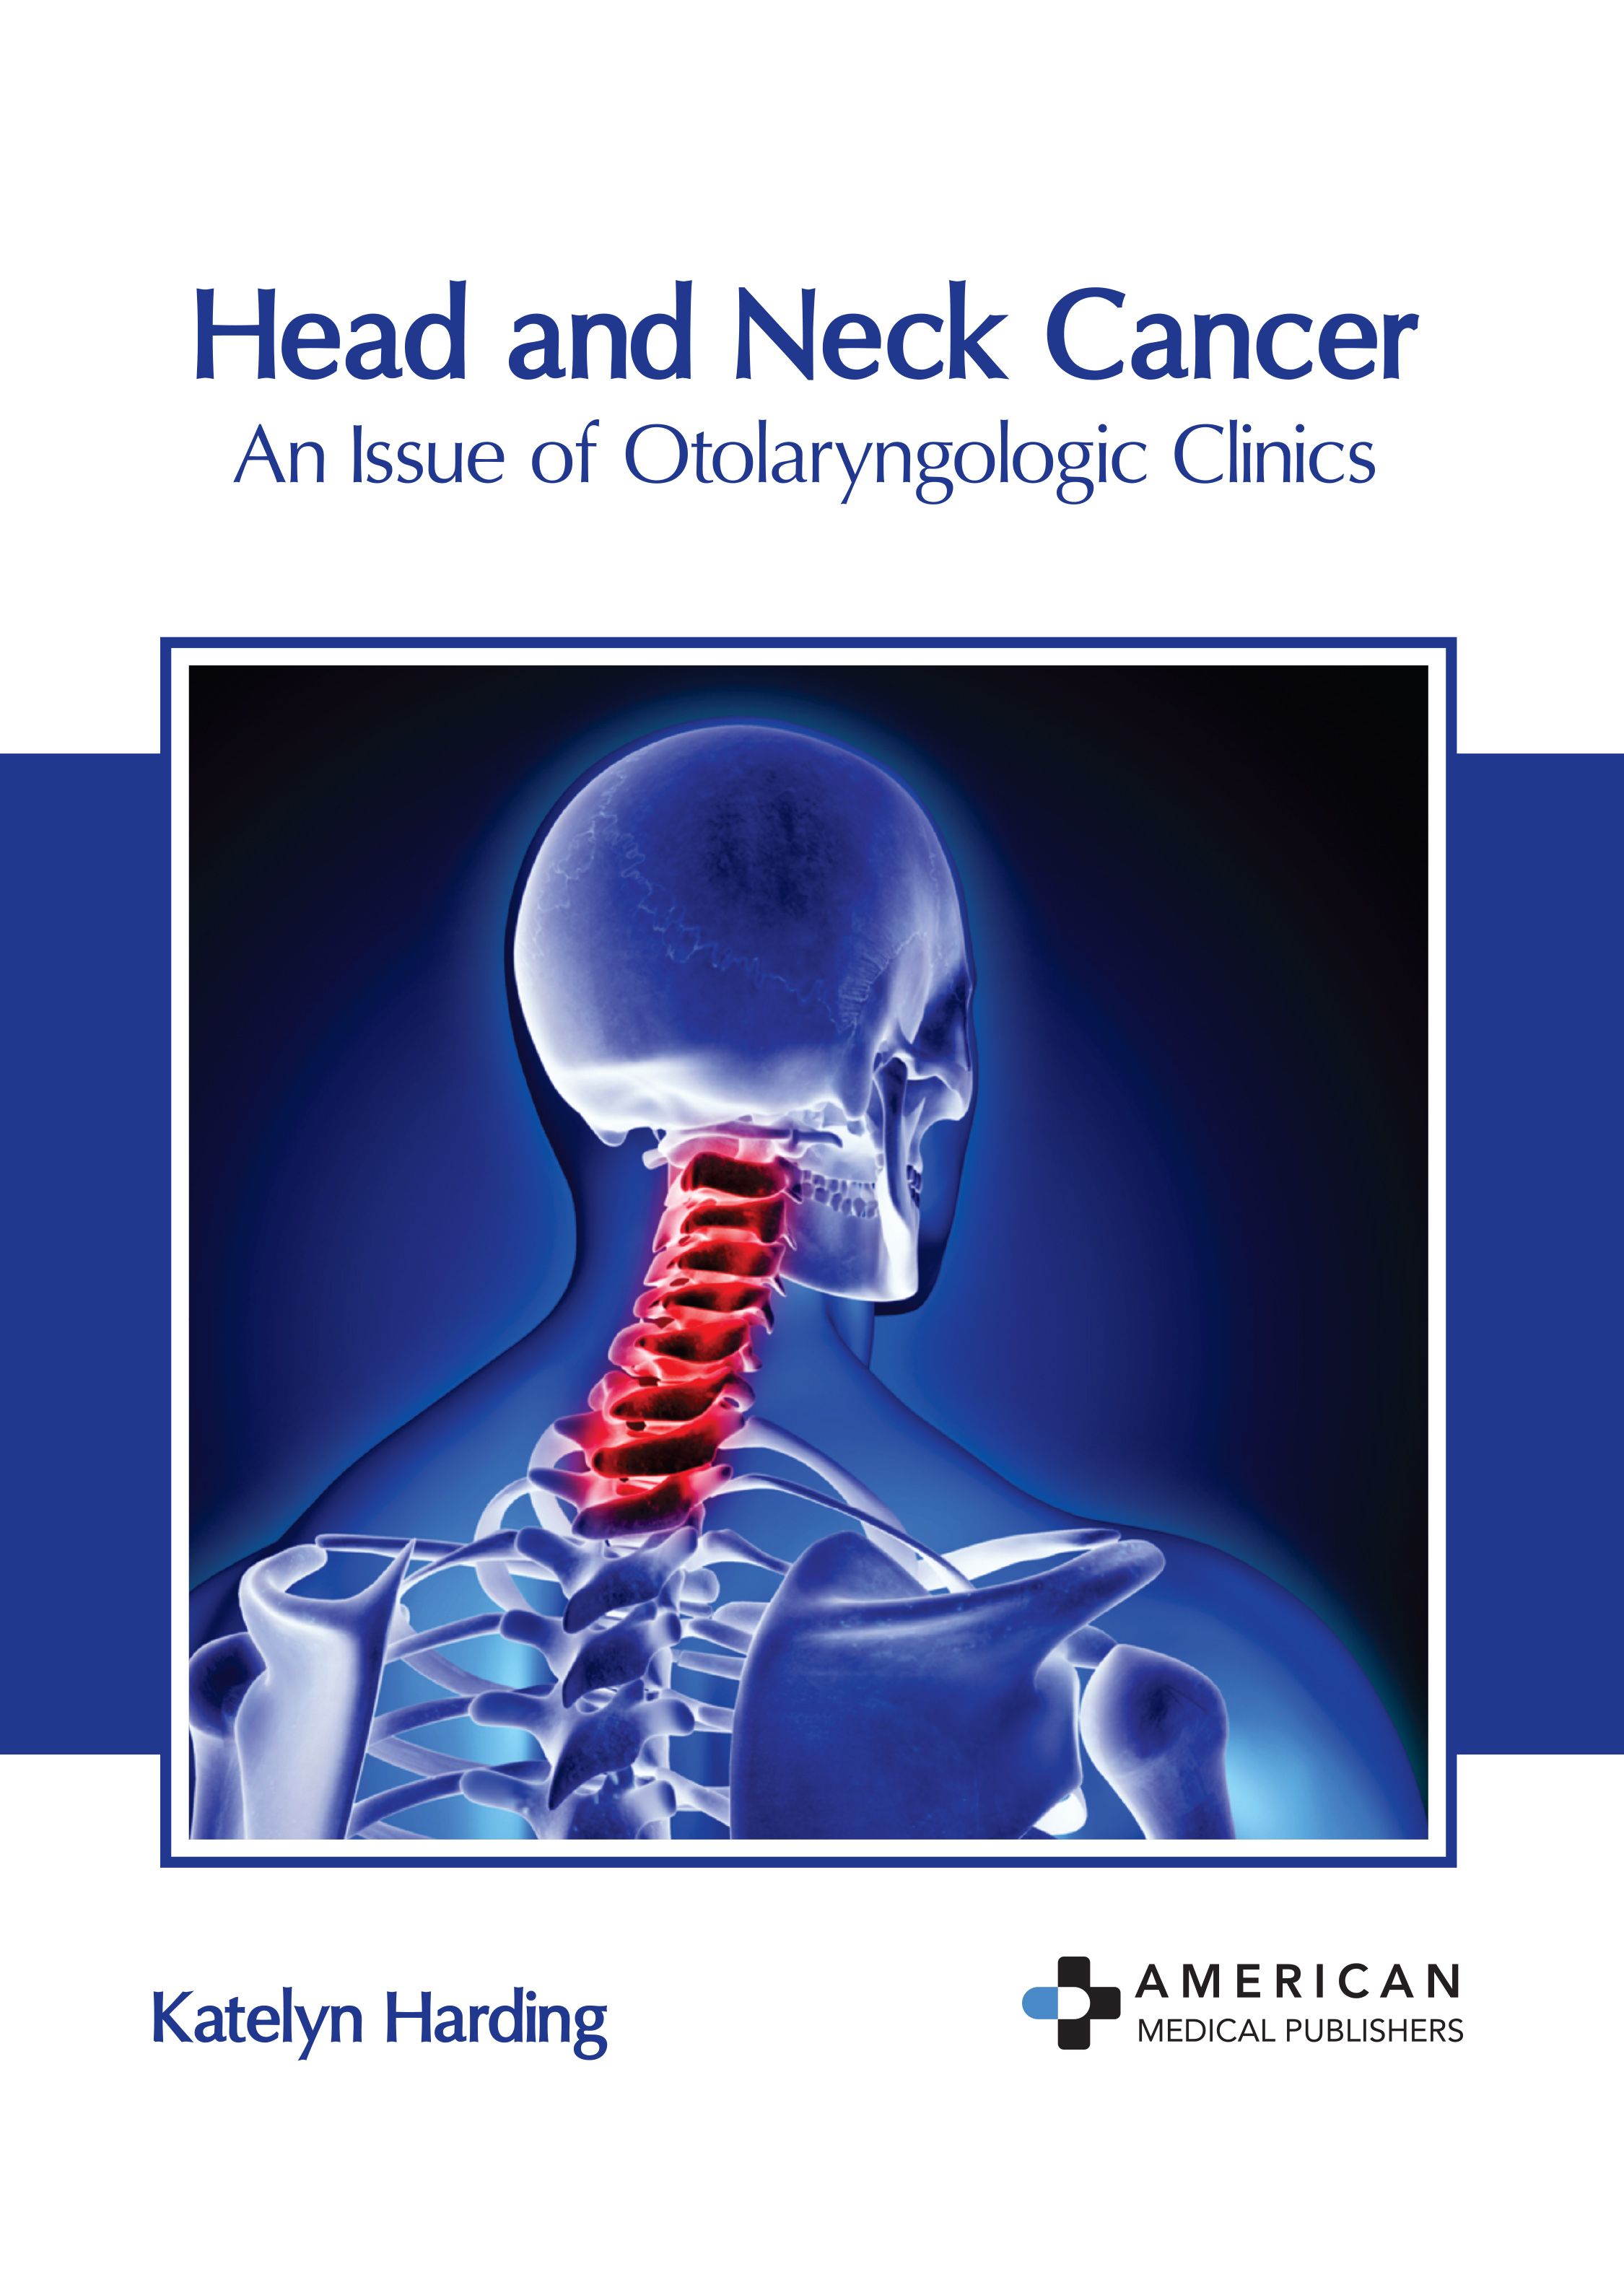 HEAD AND NECK CANCER: AN ISSUE OF OTOLARYNGOLOGIC CLINICS